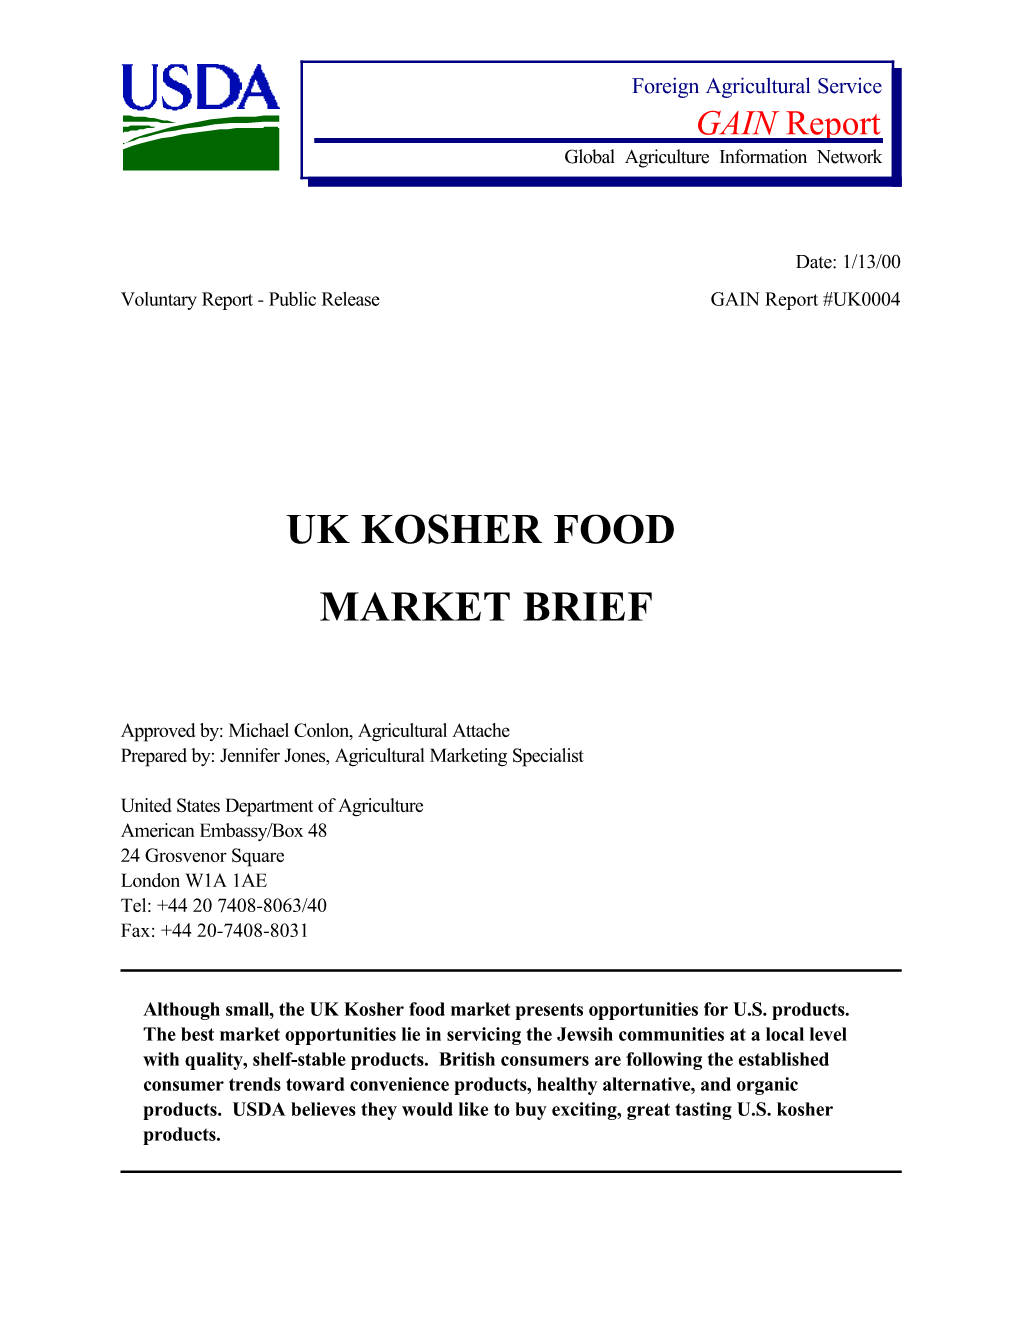 Uk Kosher Food Market Brief